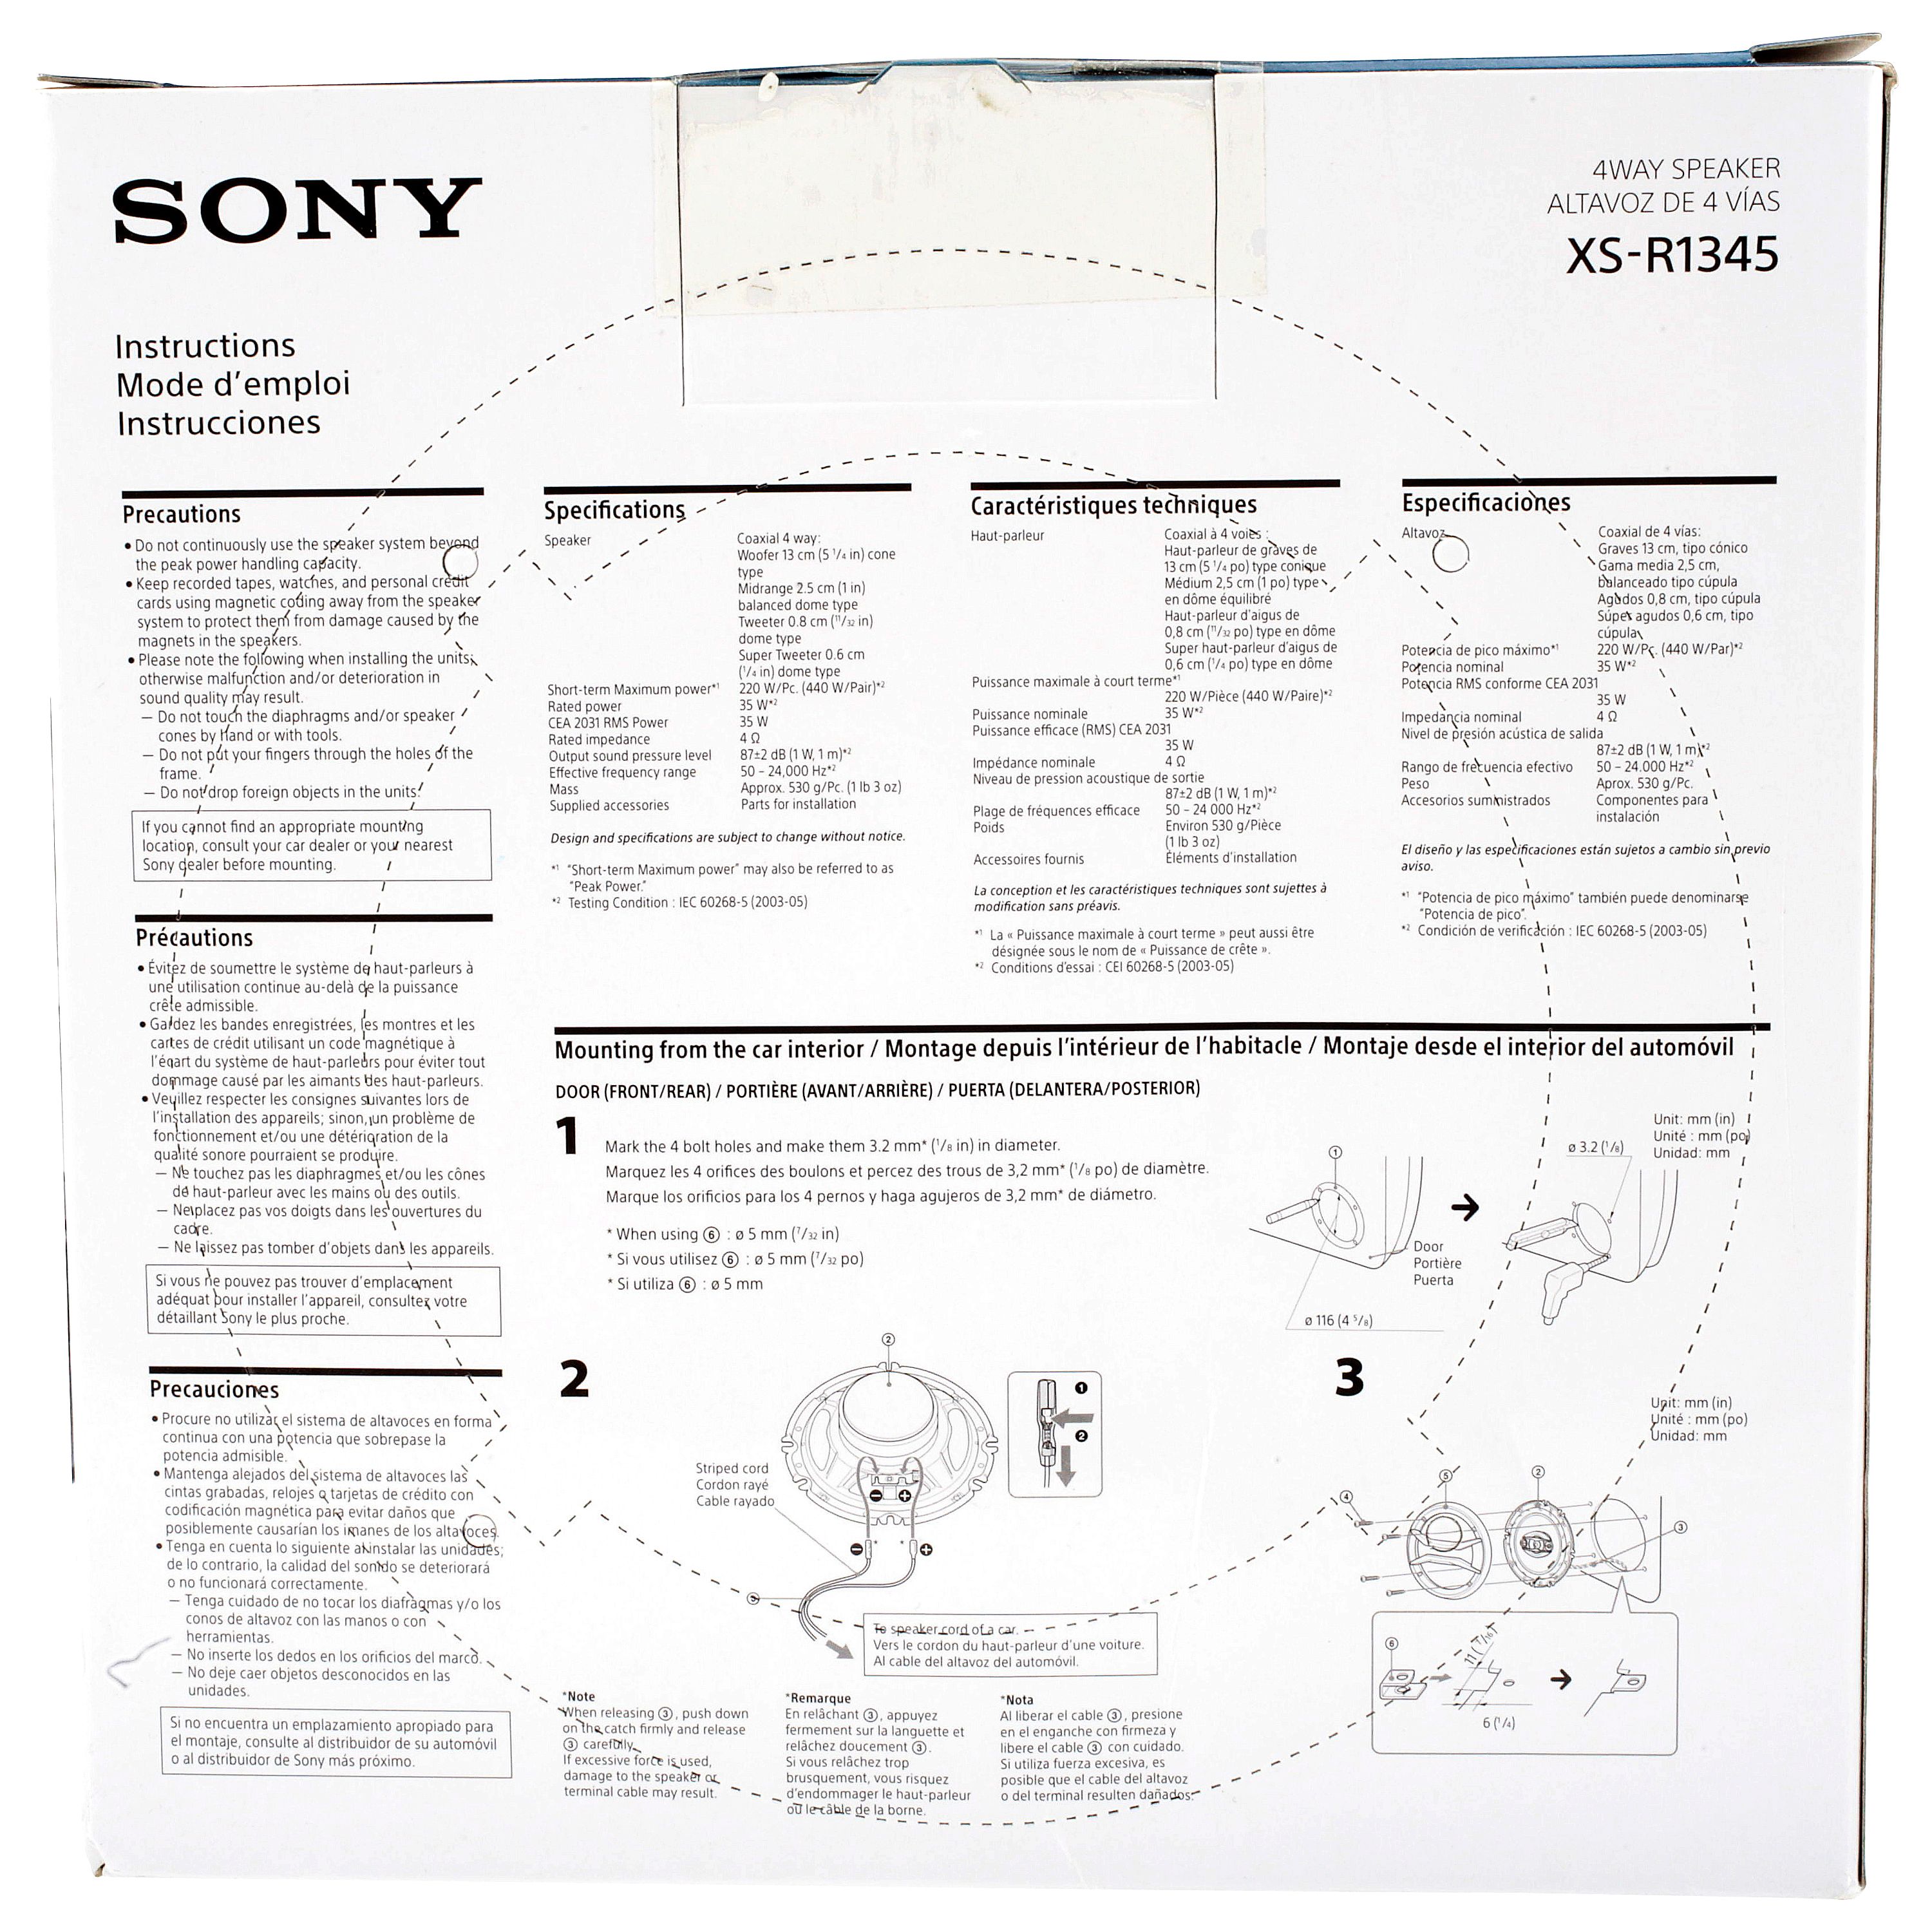 Sony XS-R1345 5-1/4" 4-Way Car Speaker - image 2 of 5